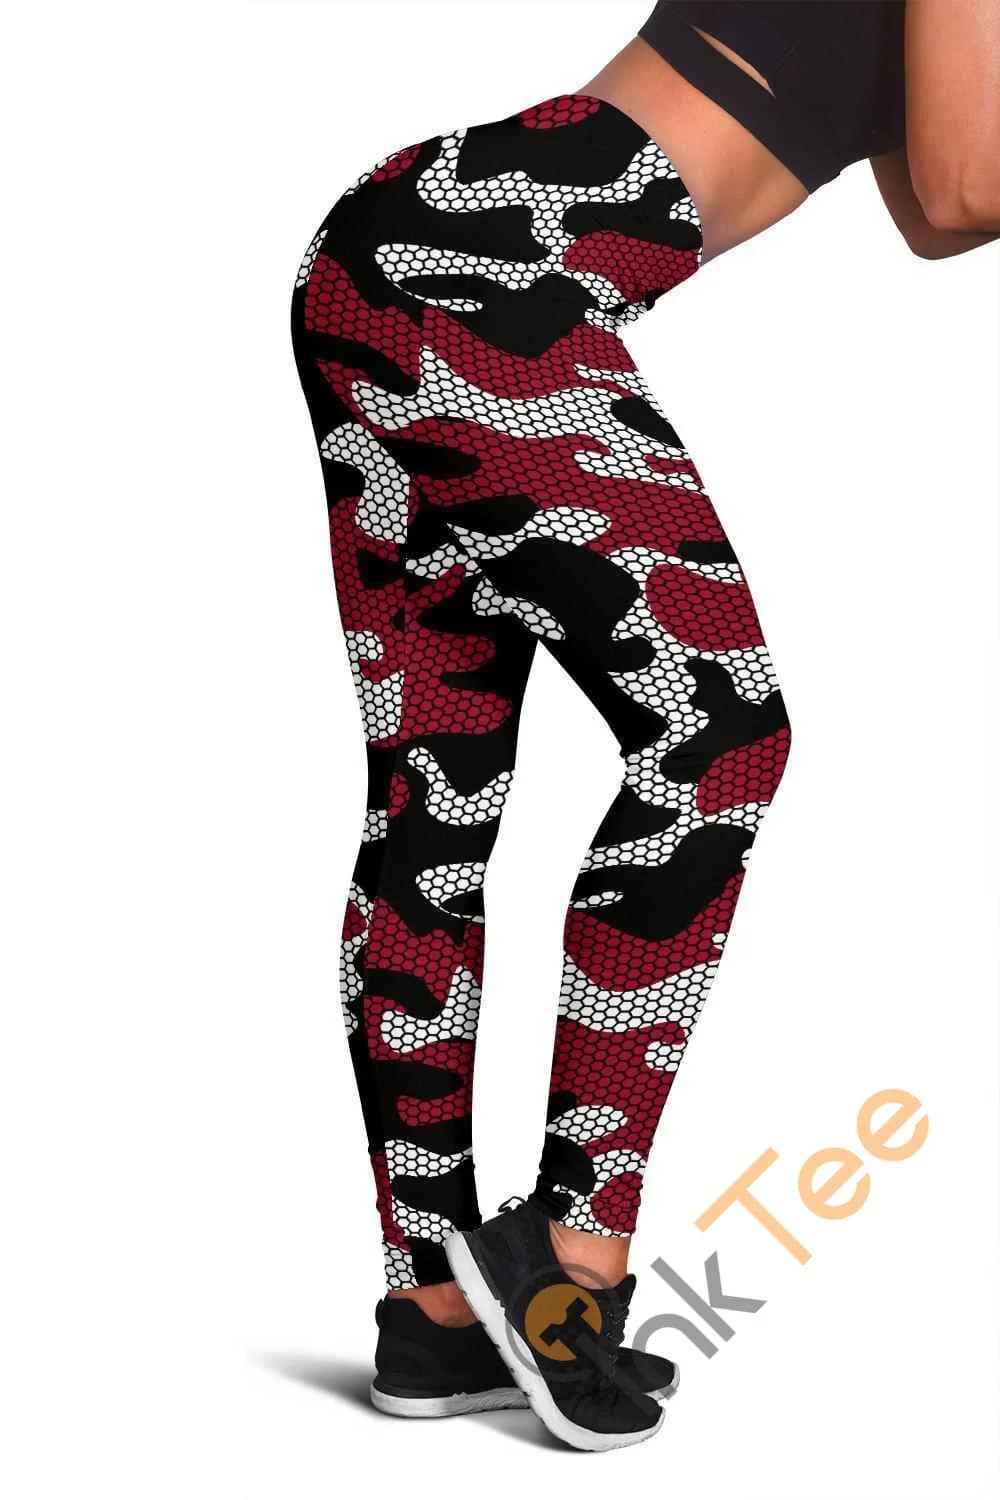 Atlanta Falcons Inspired Hex Camo 3D All Over Print For Yoga Fitness Fashion Women's Leggings